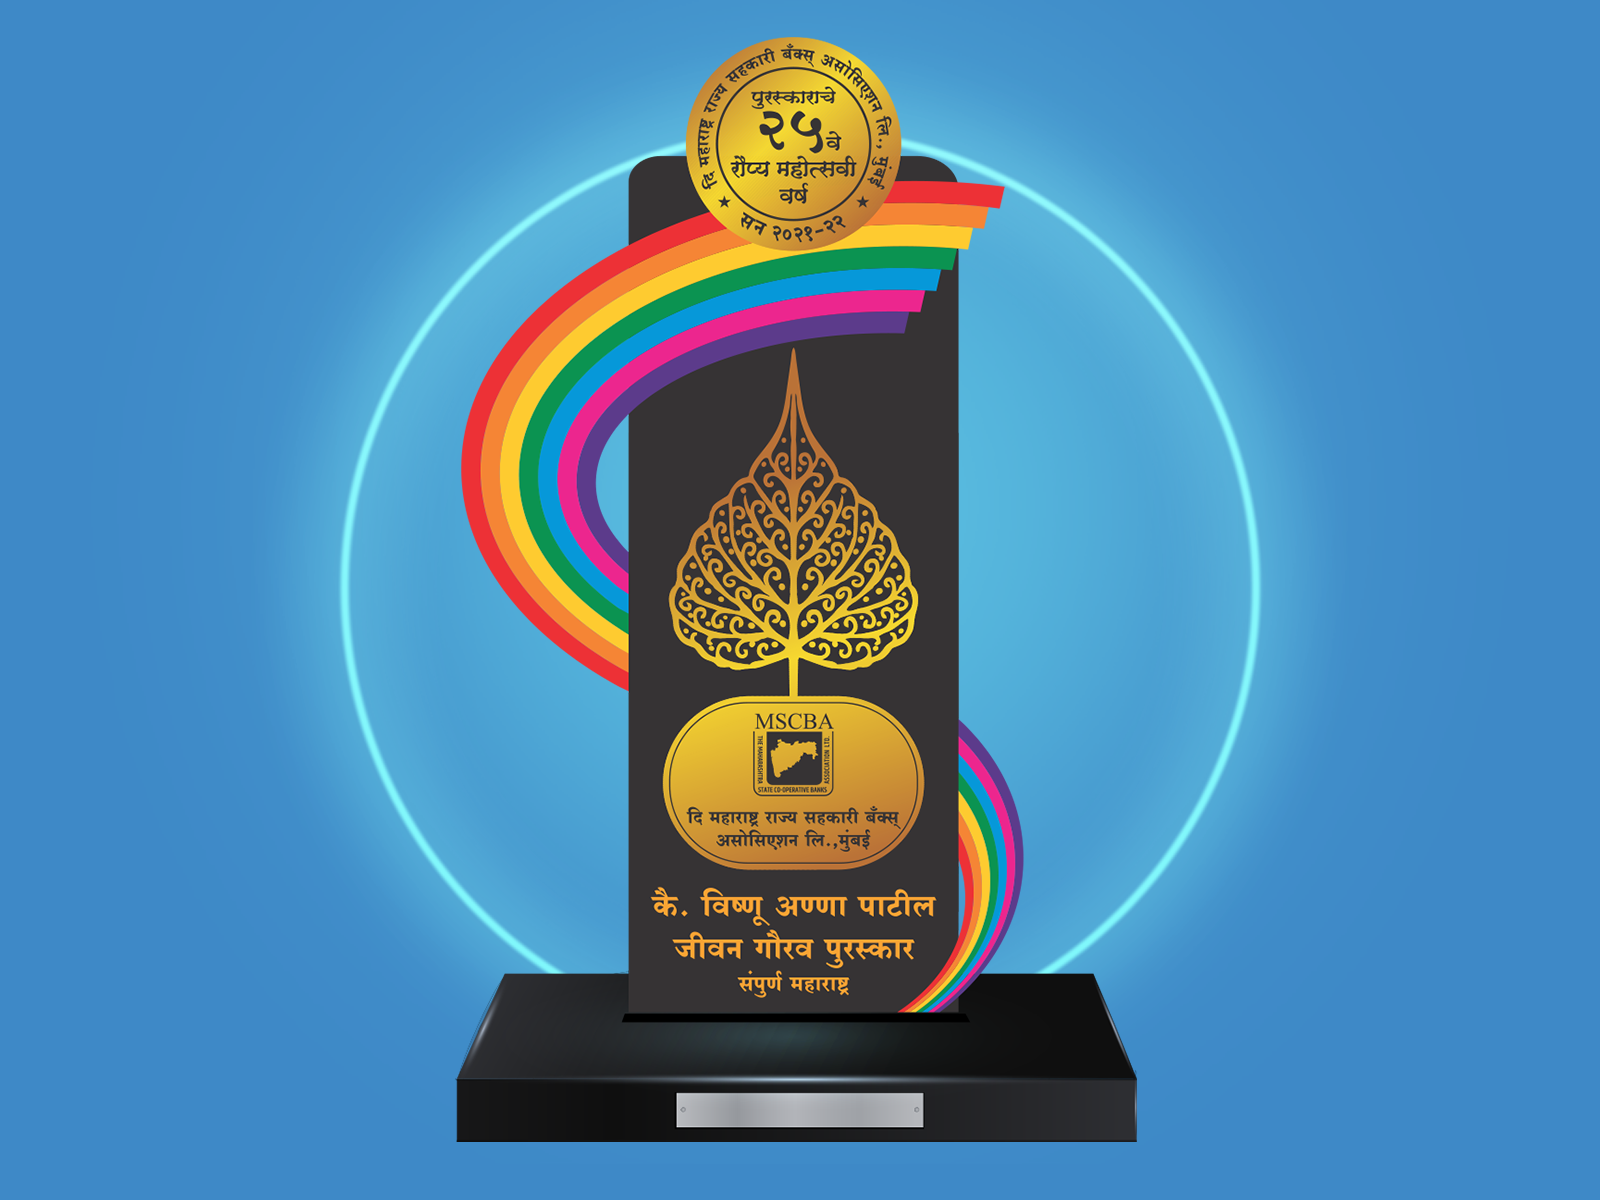 Late Vishnuanna Patil Life Time Achievement Award